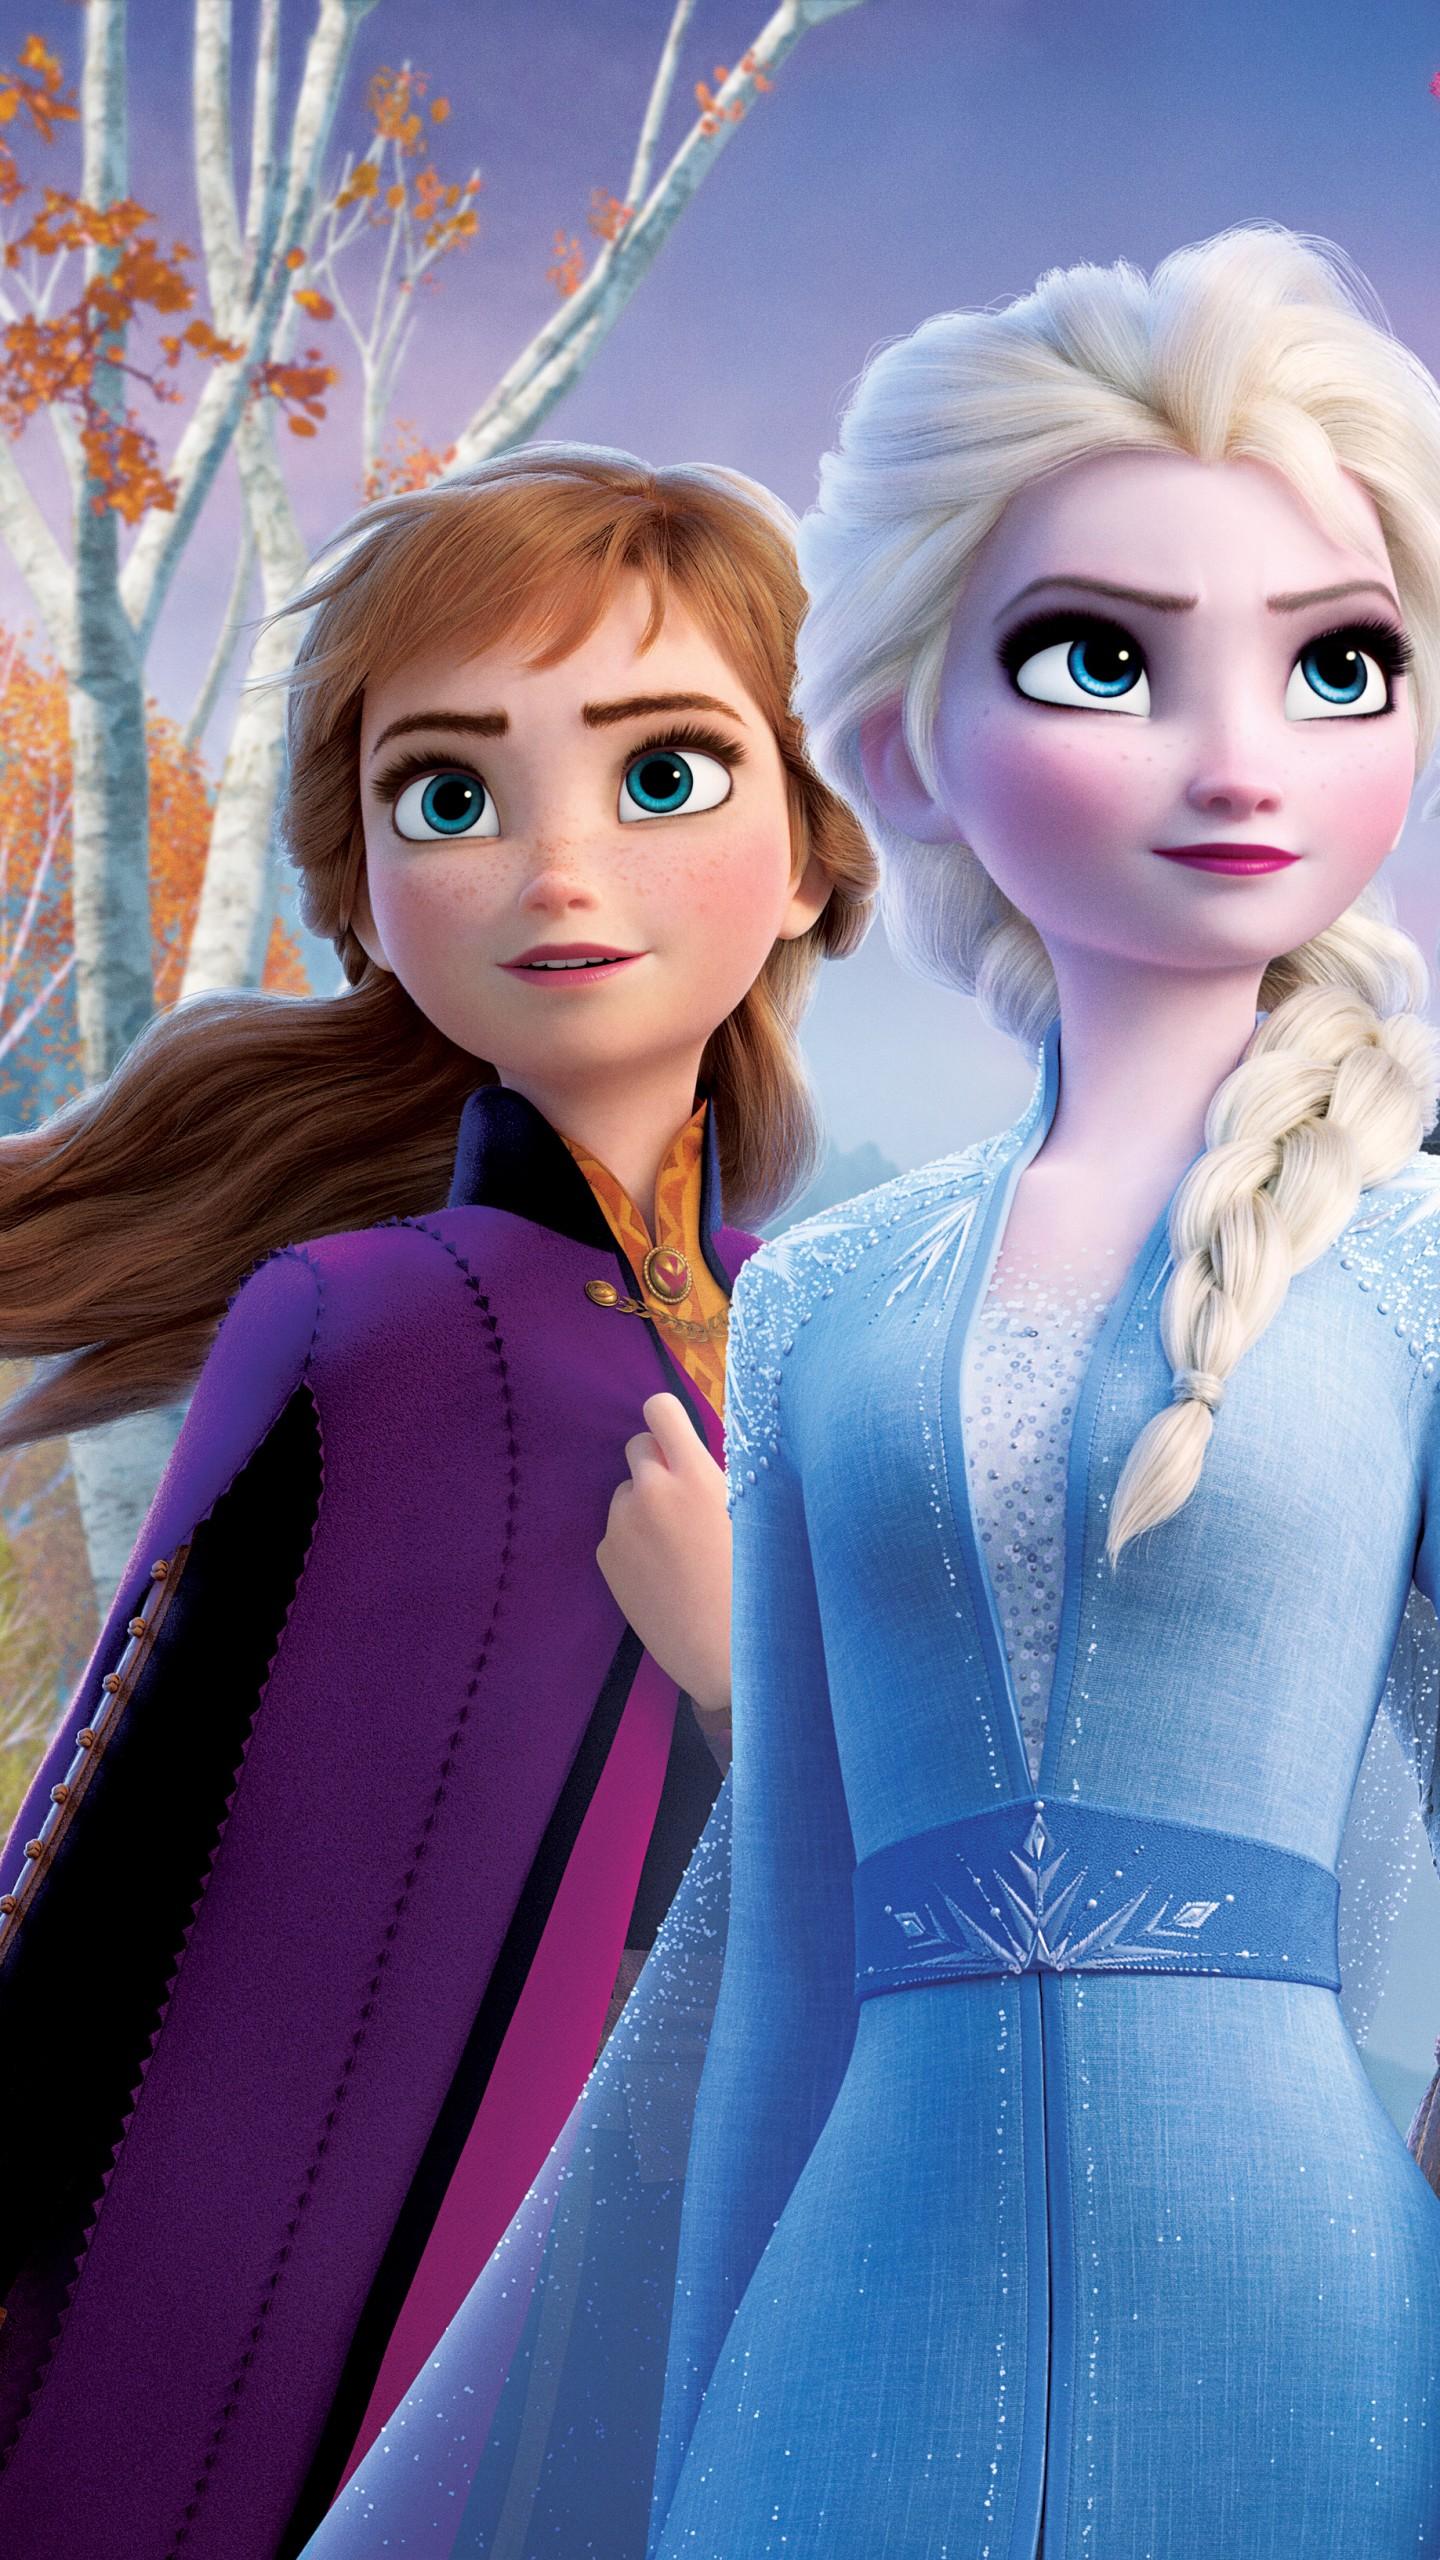 Wallpaper Frozen Queen Elsa, Anna, Olaf, Kristoff, Walt Disney